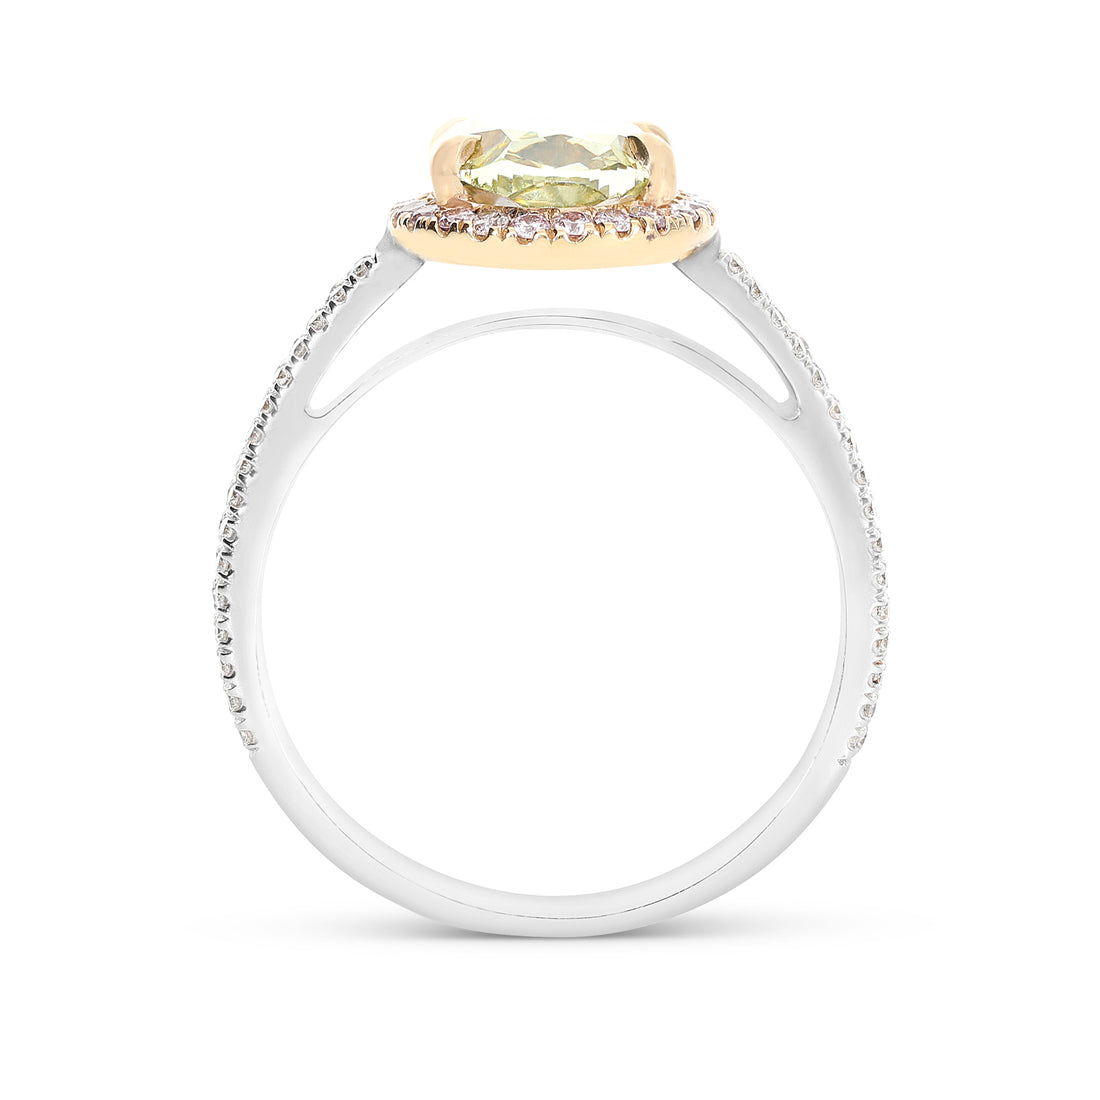 Oval Shaped Fancy Yellow Diamond Ring